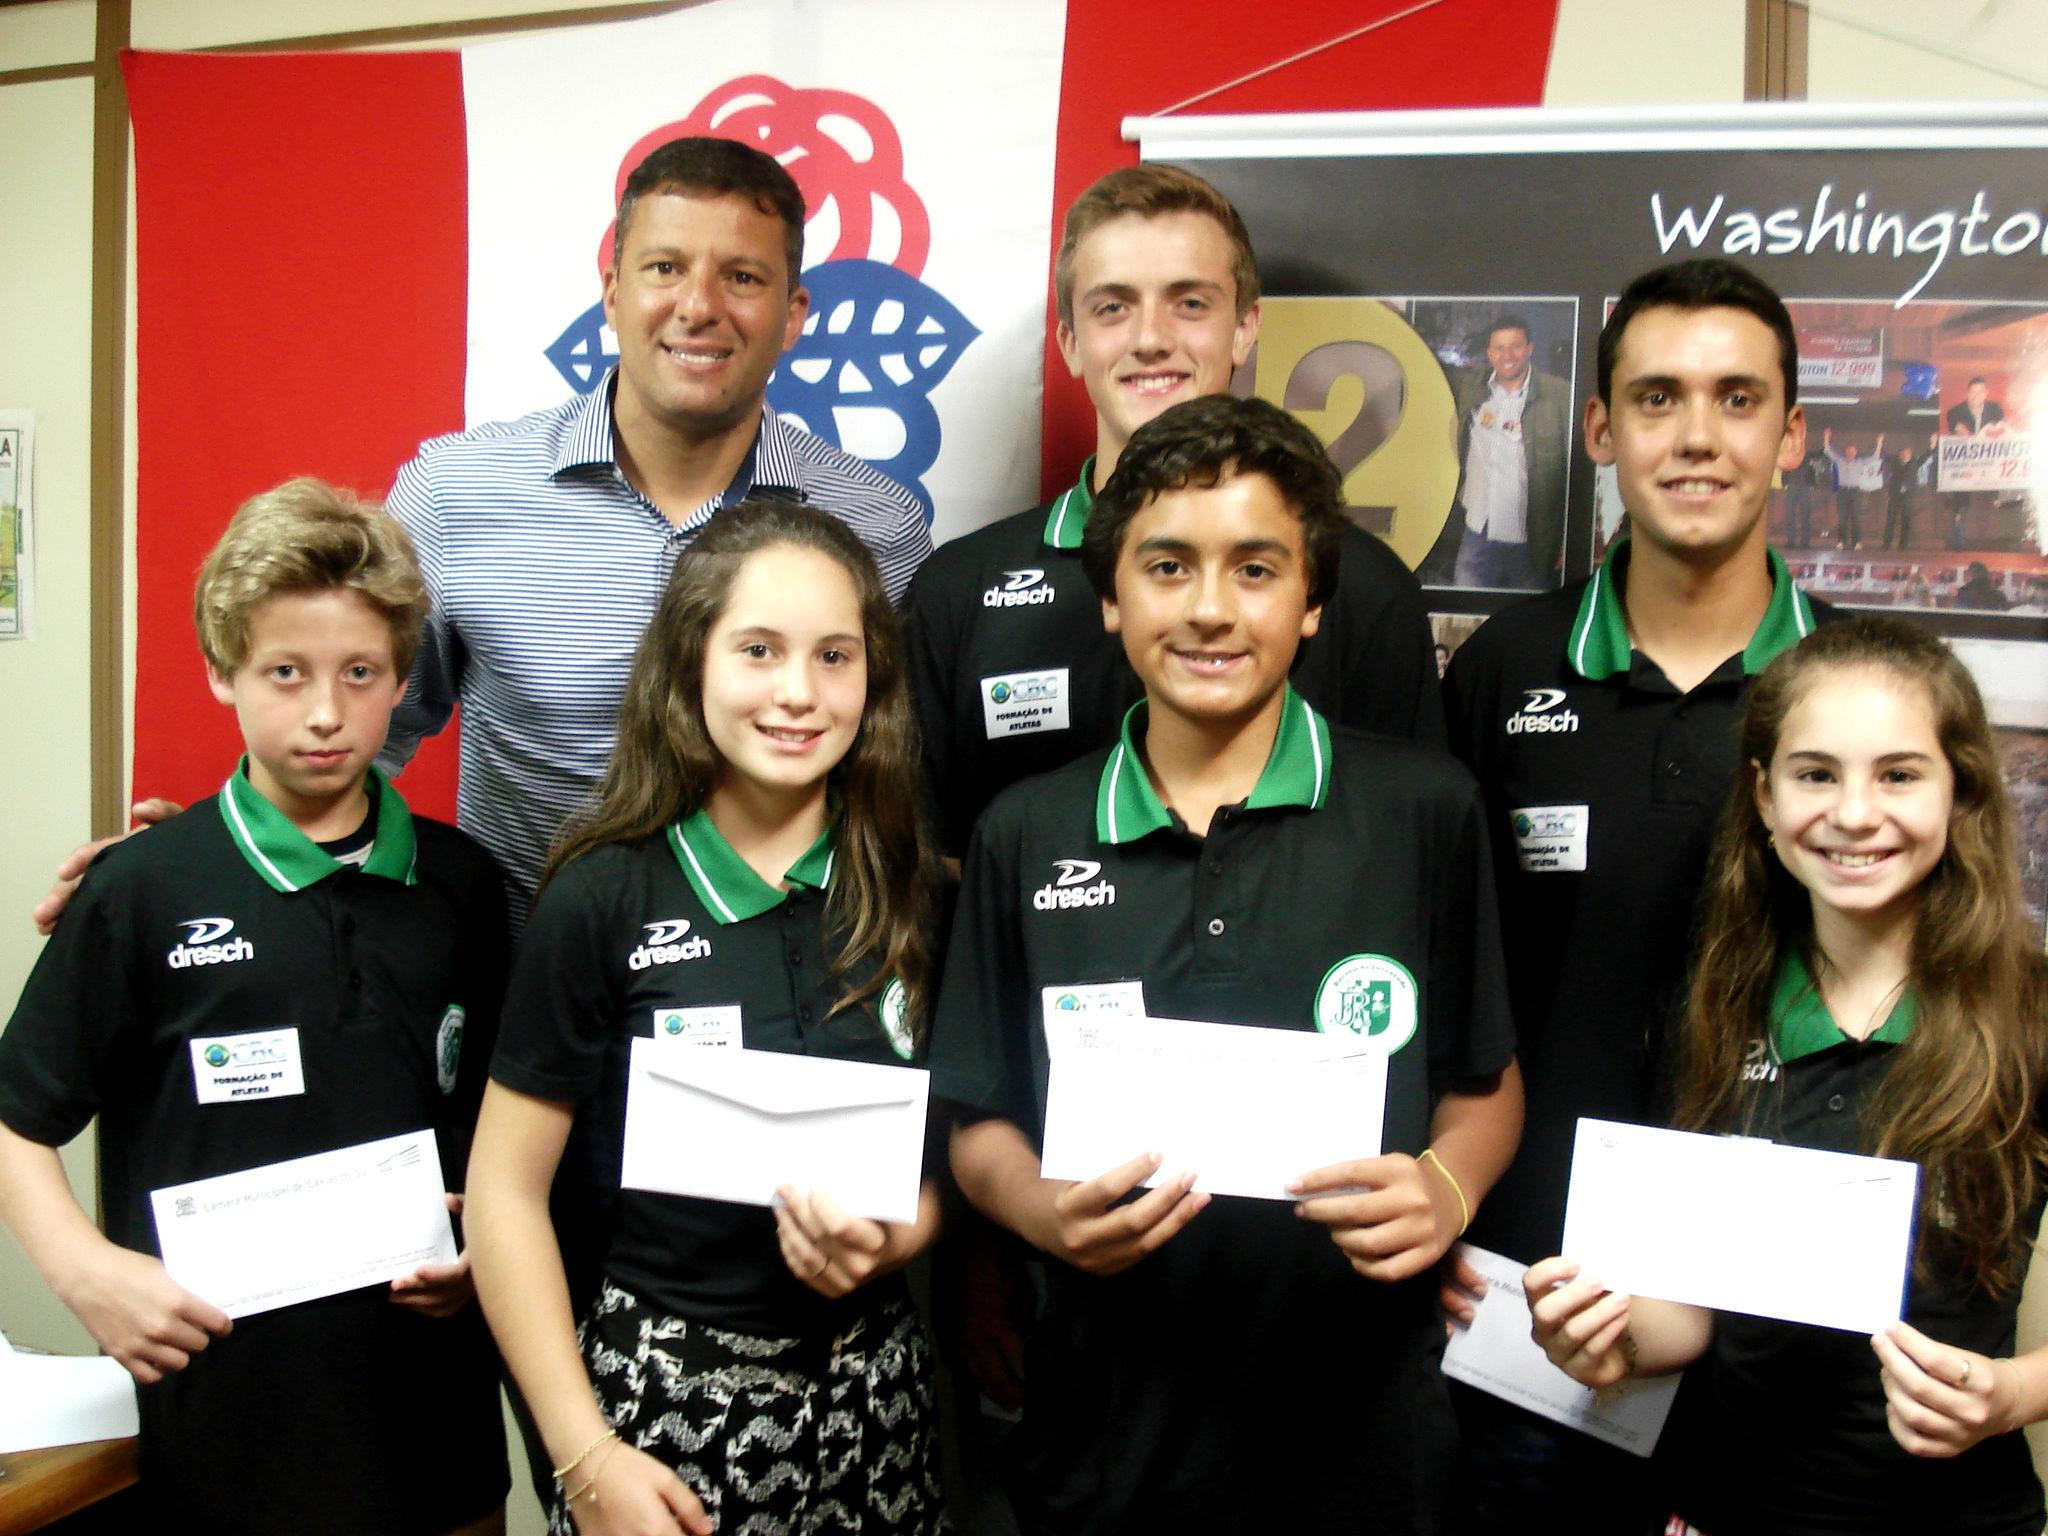 Vereador Washington entrega votos de congratulações aos atletas de Tênis Infantil do RJ